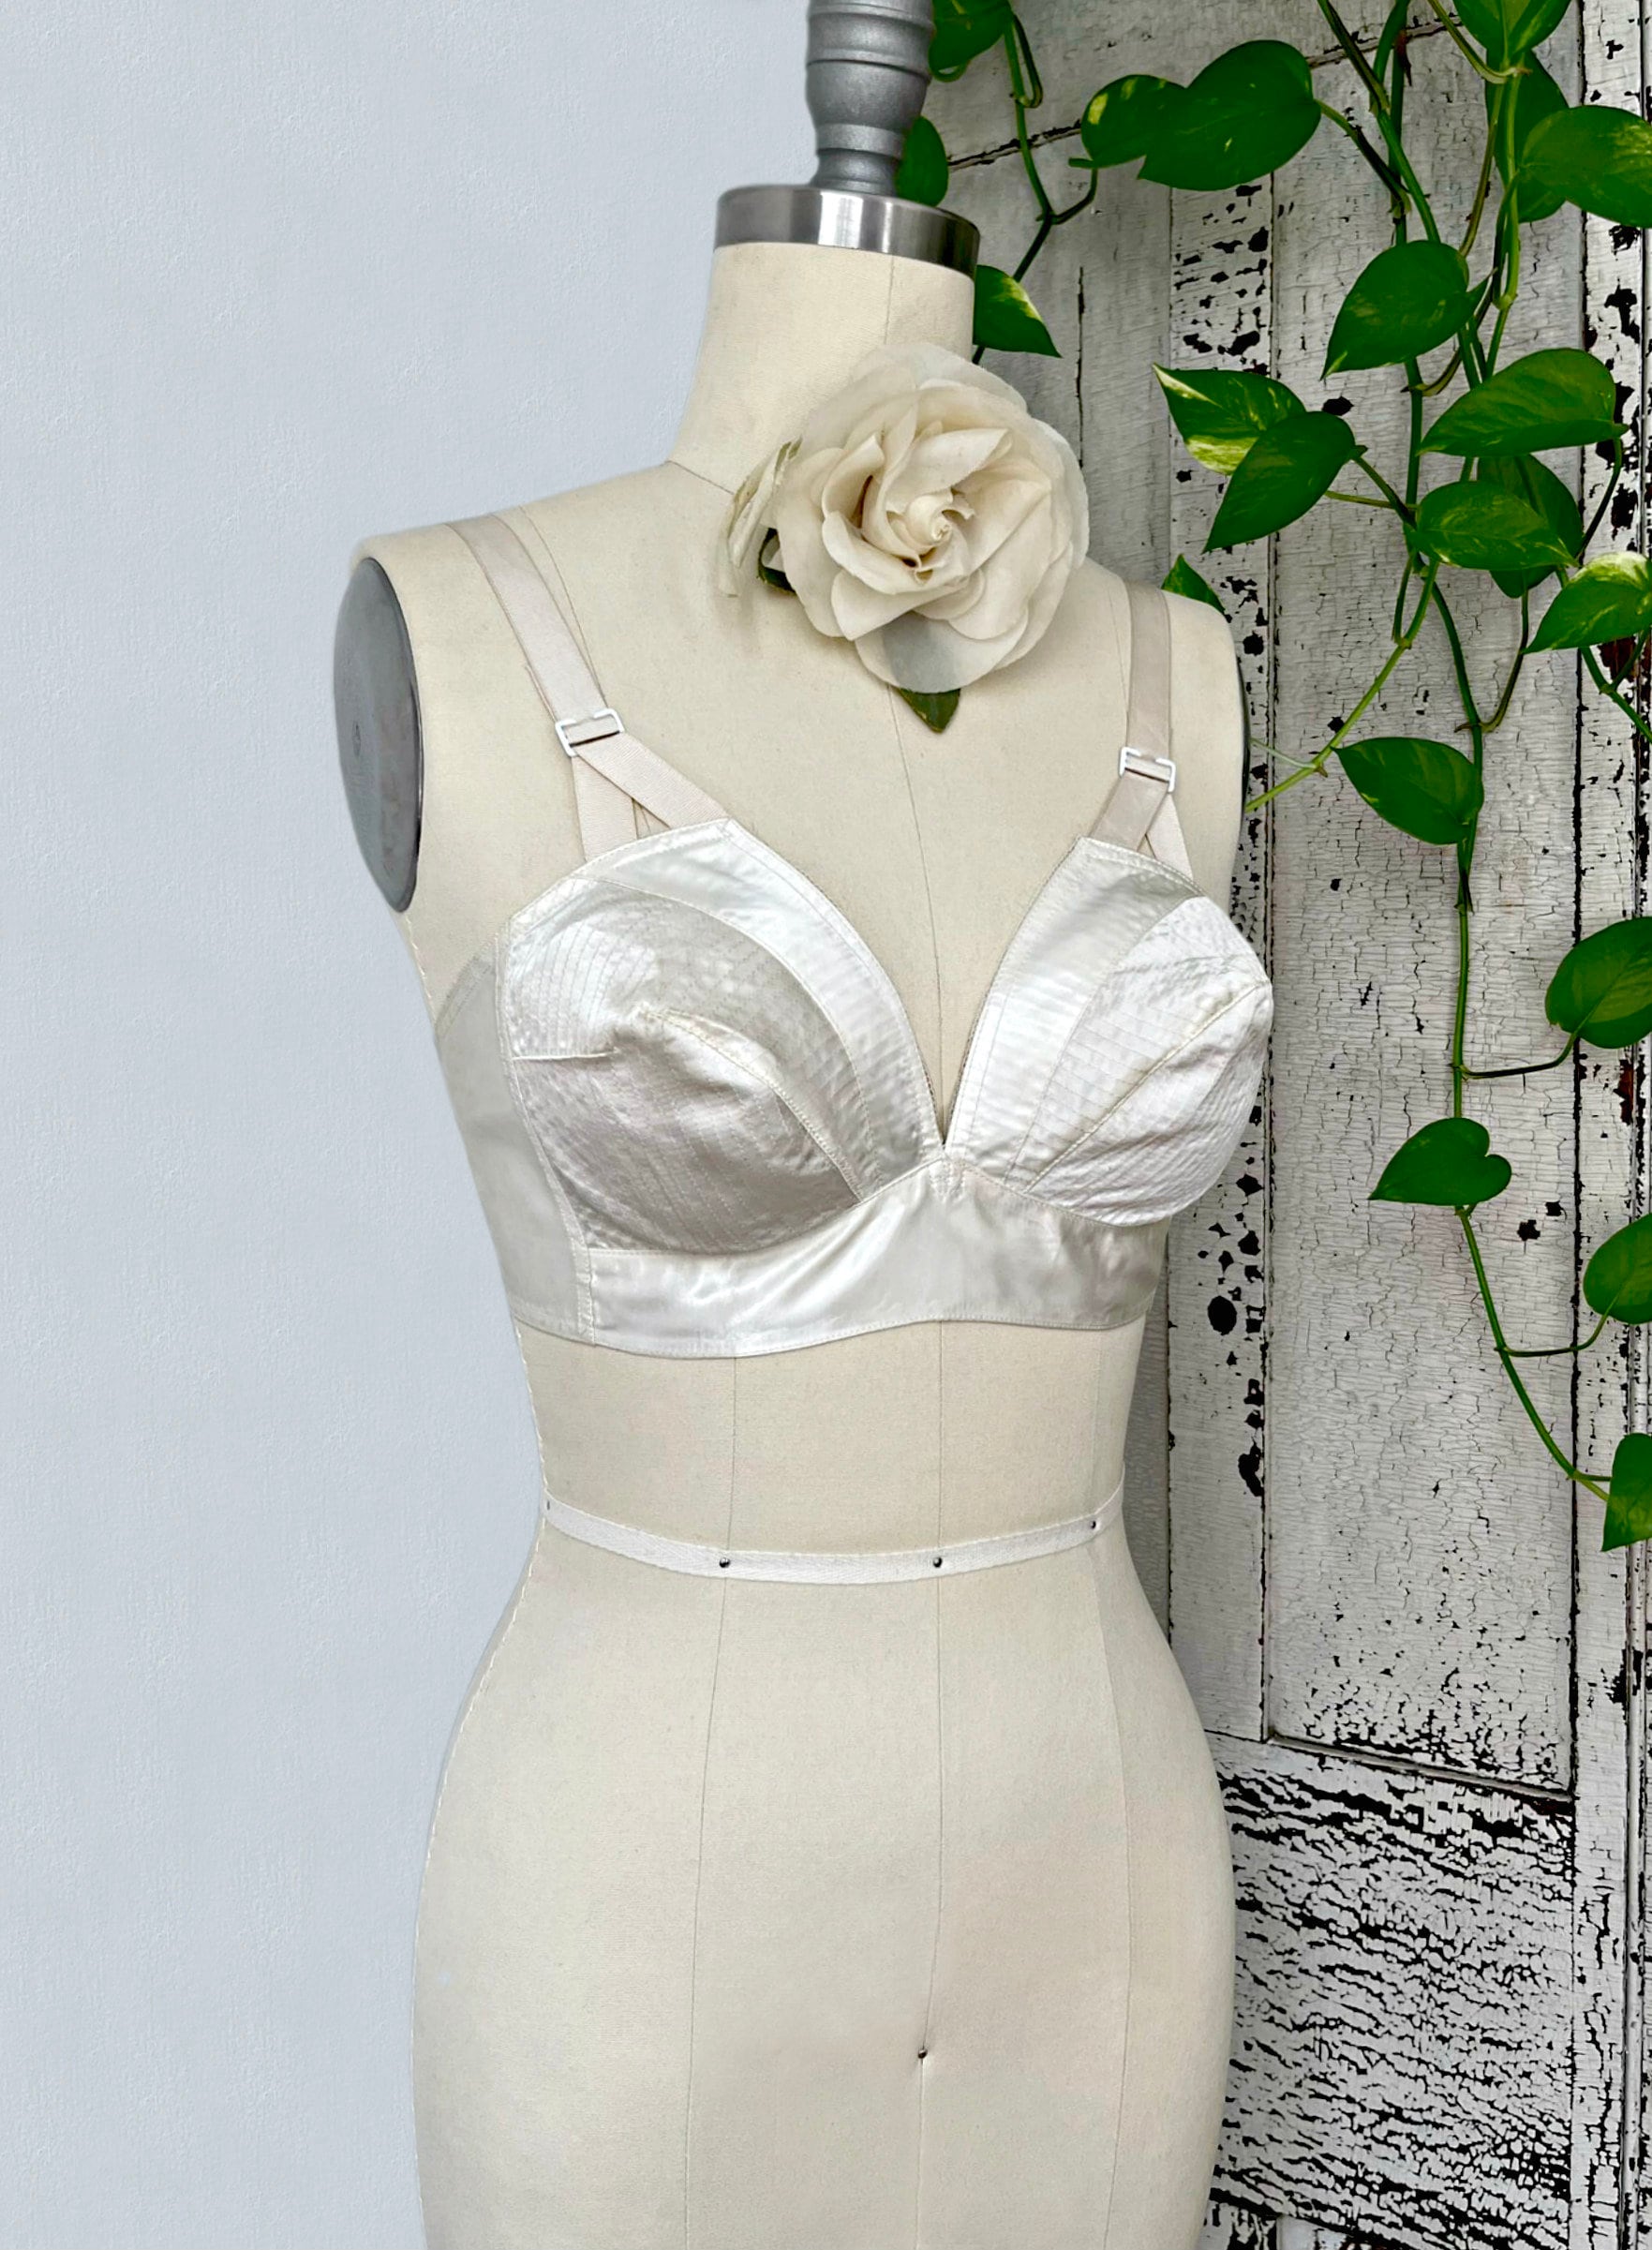 Silk Lace bra/ French style Silk Bra/Pantie, Women Lingerie Bra, Wedding  white lace bra